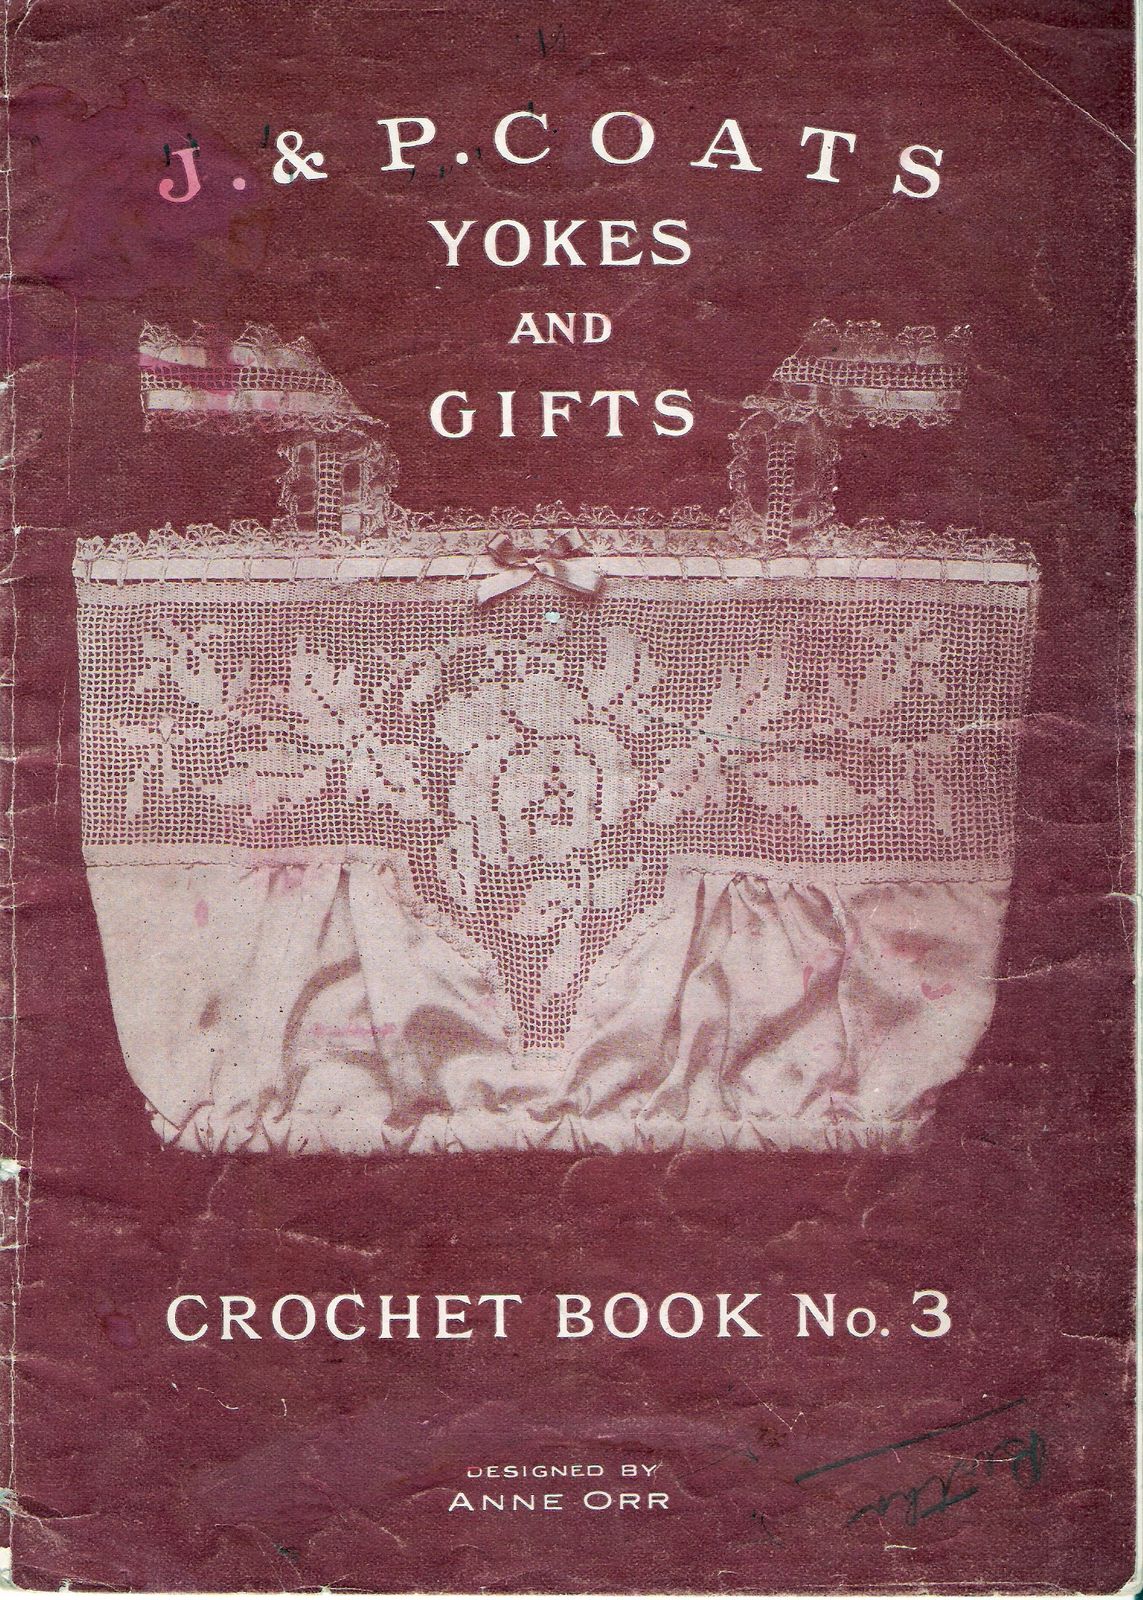 The Vintage Pattern Files: 1910's Crochet - J & P Coates Yokes and